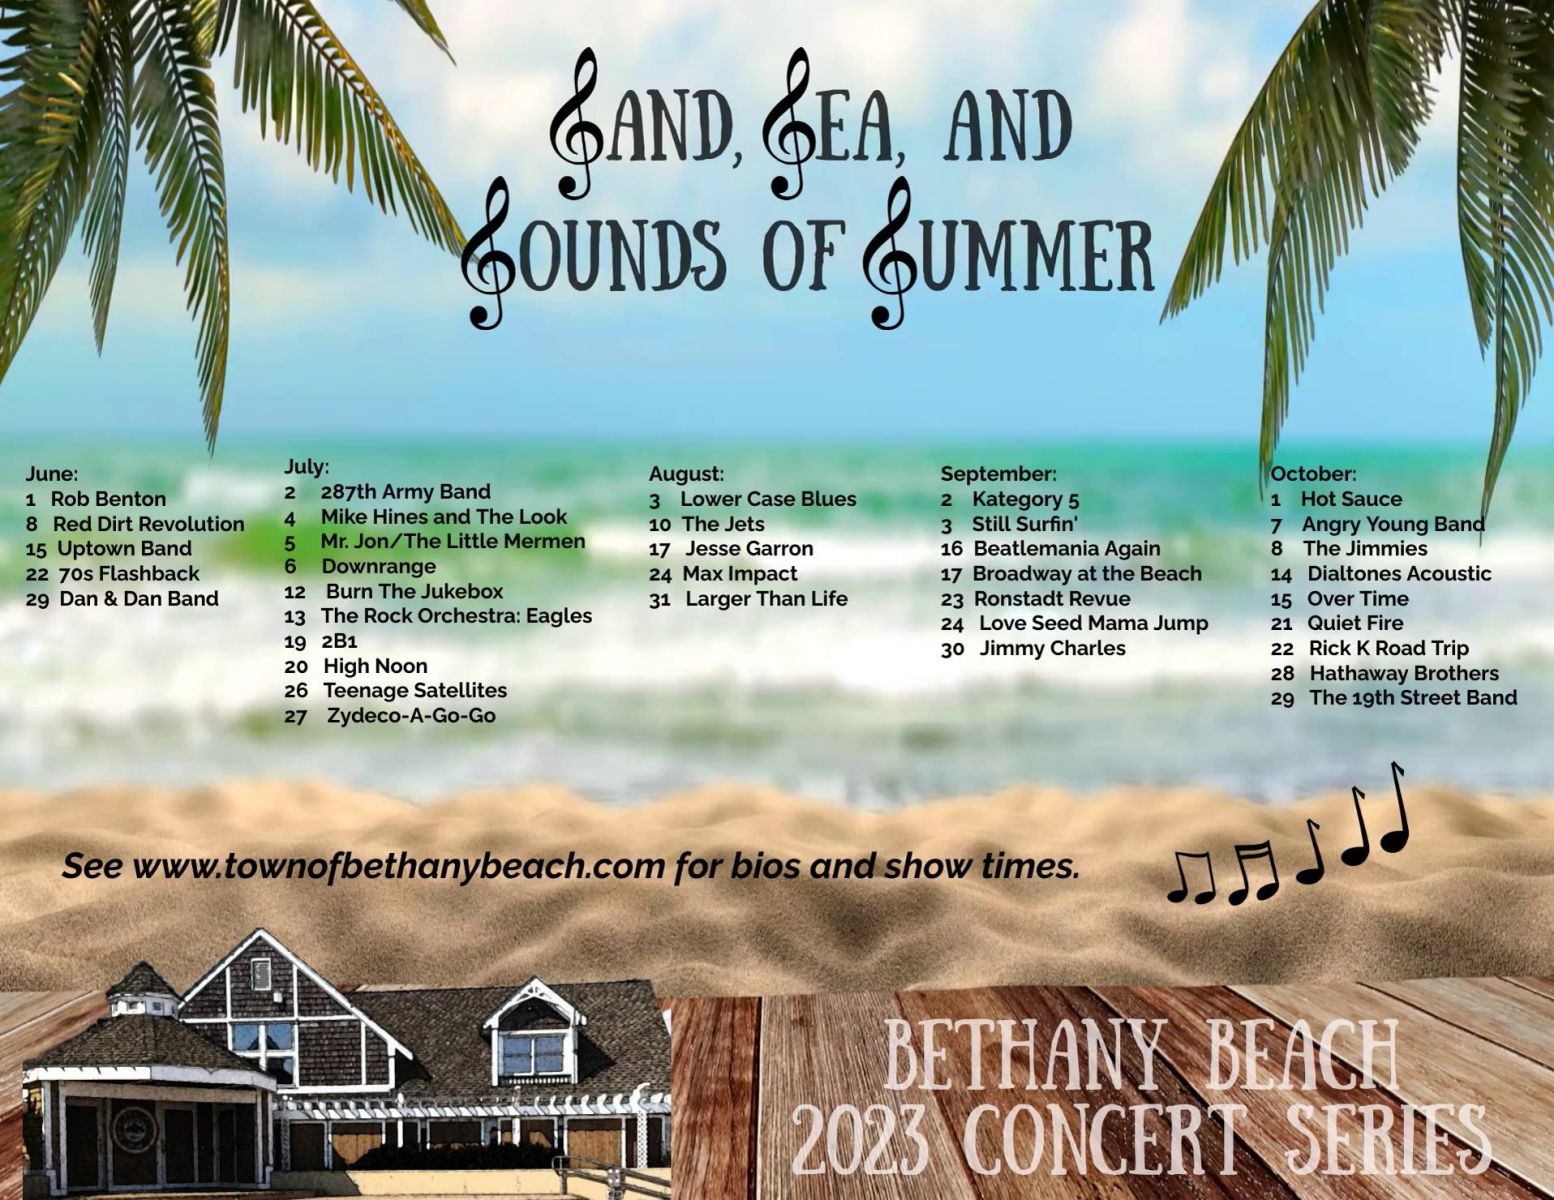 Bandstand Schedules - Southern Delaware Restaurants, Events, Golf